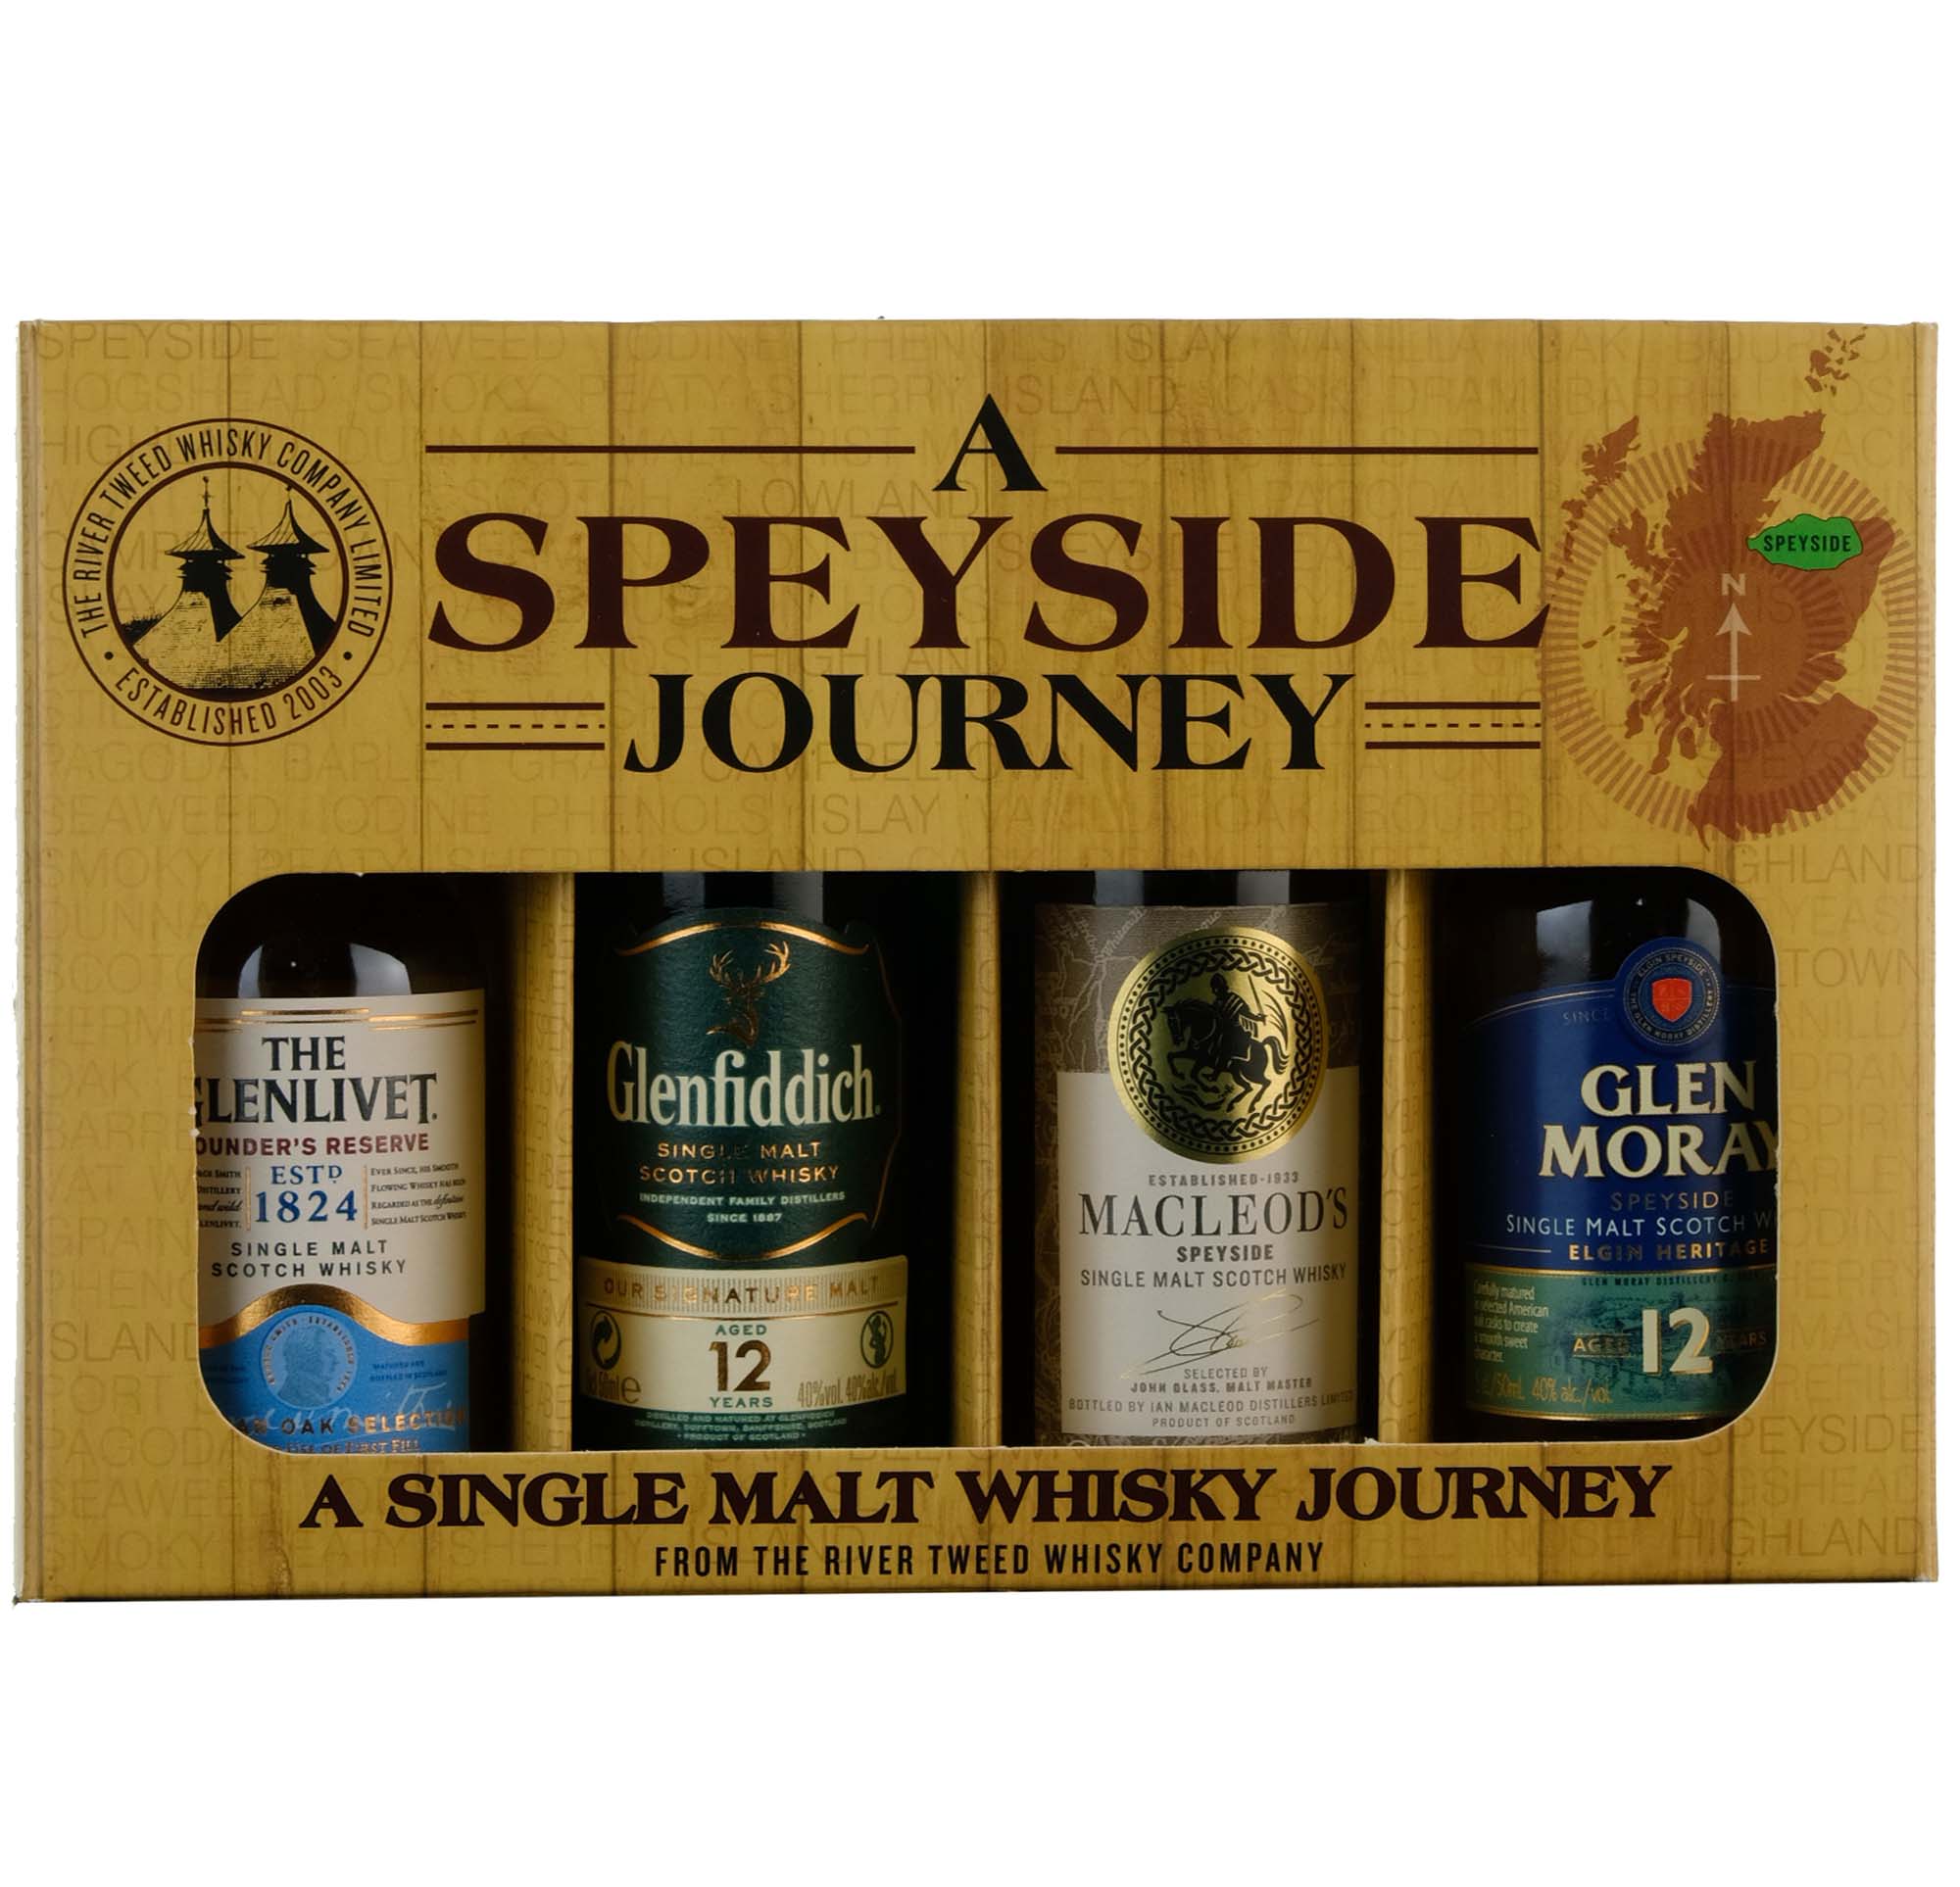 A Speyside Journey Whisky Miniature Gift Set